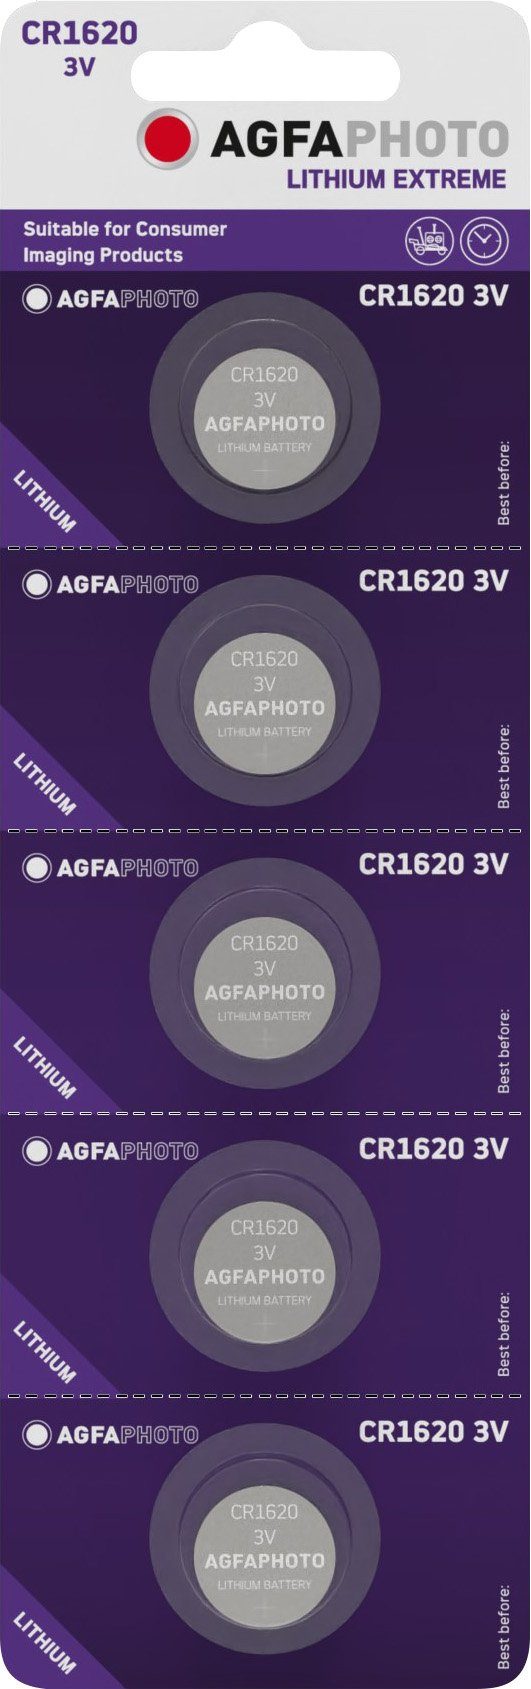 AgfaPhoto Agfaphoto Batterie Lithium, Knopfzelle, CR1620, 3V Extreme, Retail Bl Knopfzelle